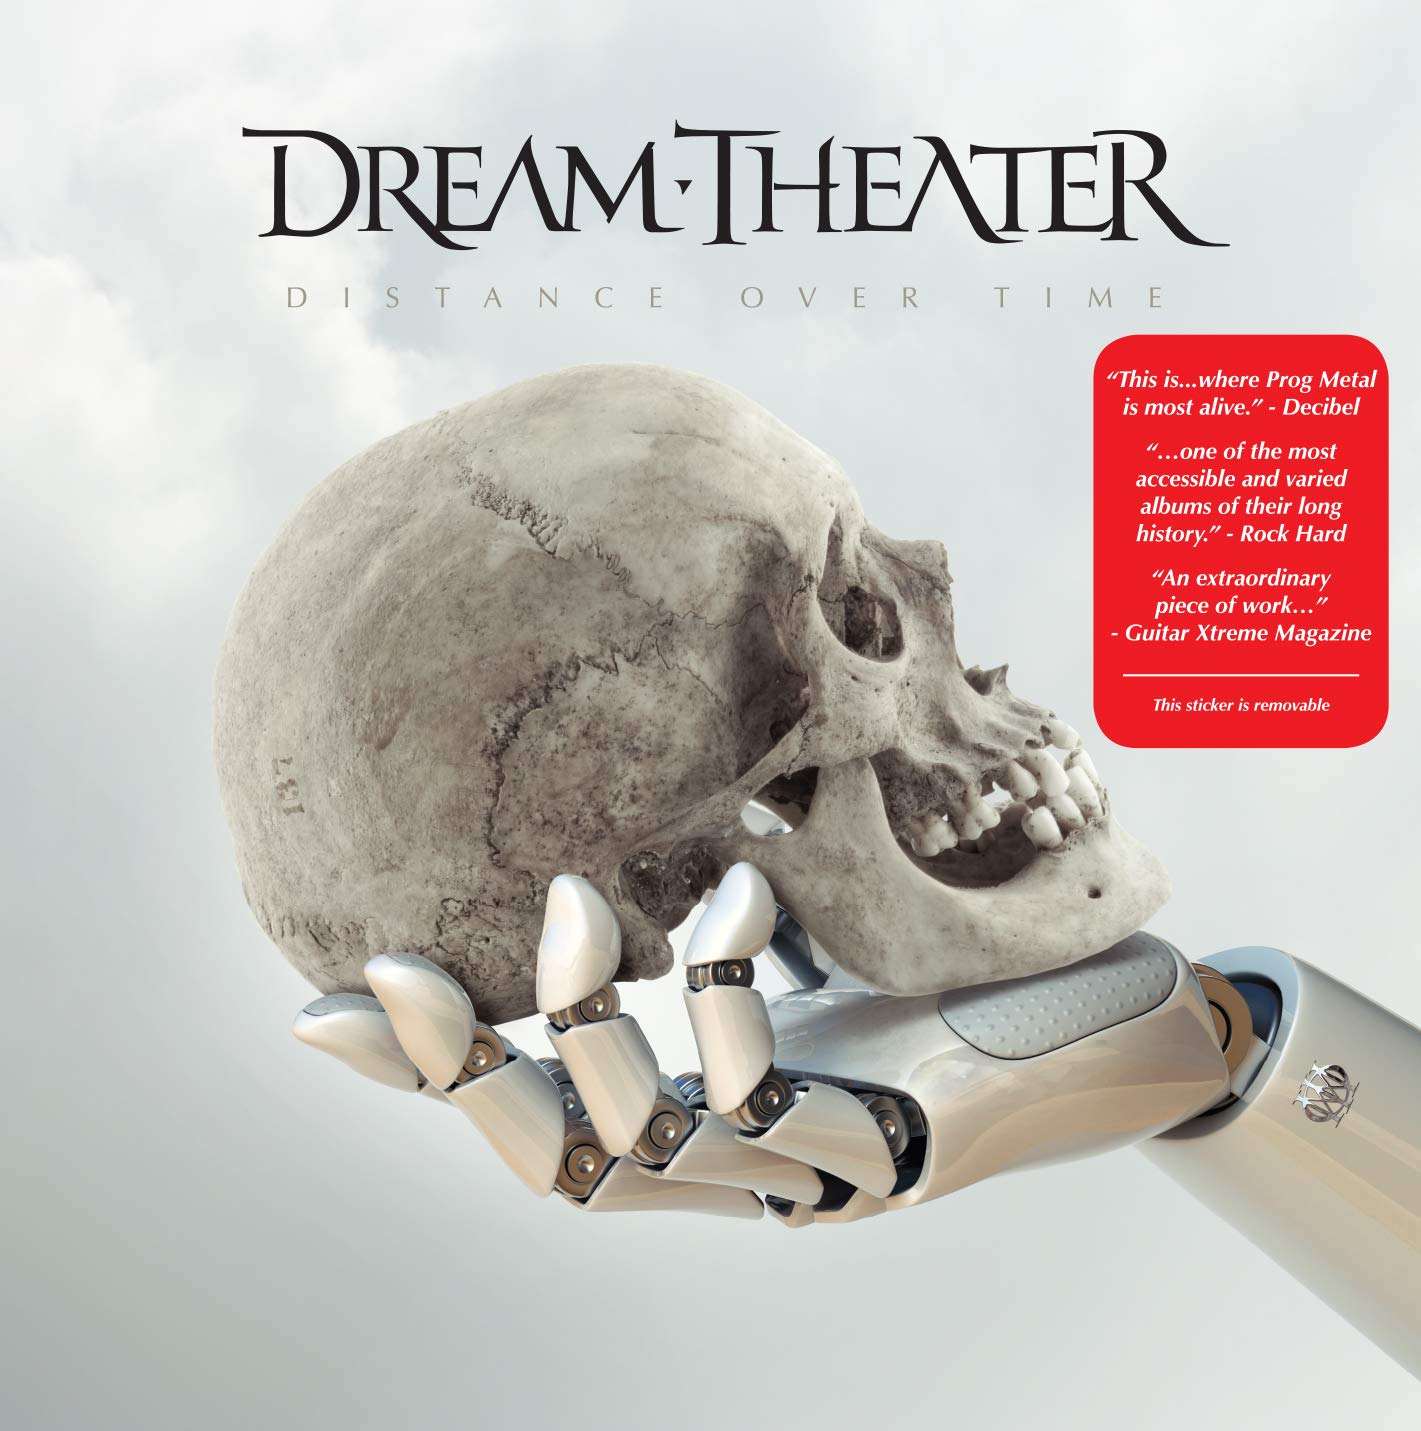 Альбом theatre dreams. Dream Theater distance over time 2019. Dream Theater 2019 distance over time обложка. Dream Theater CD. Dream Theater обложки альбомов.